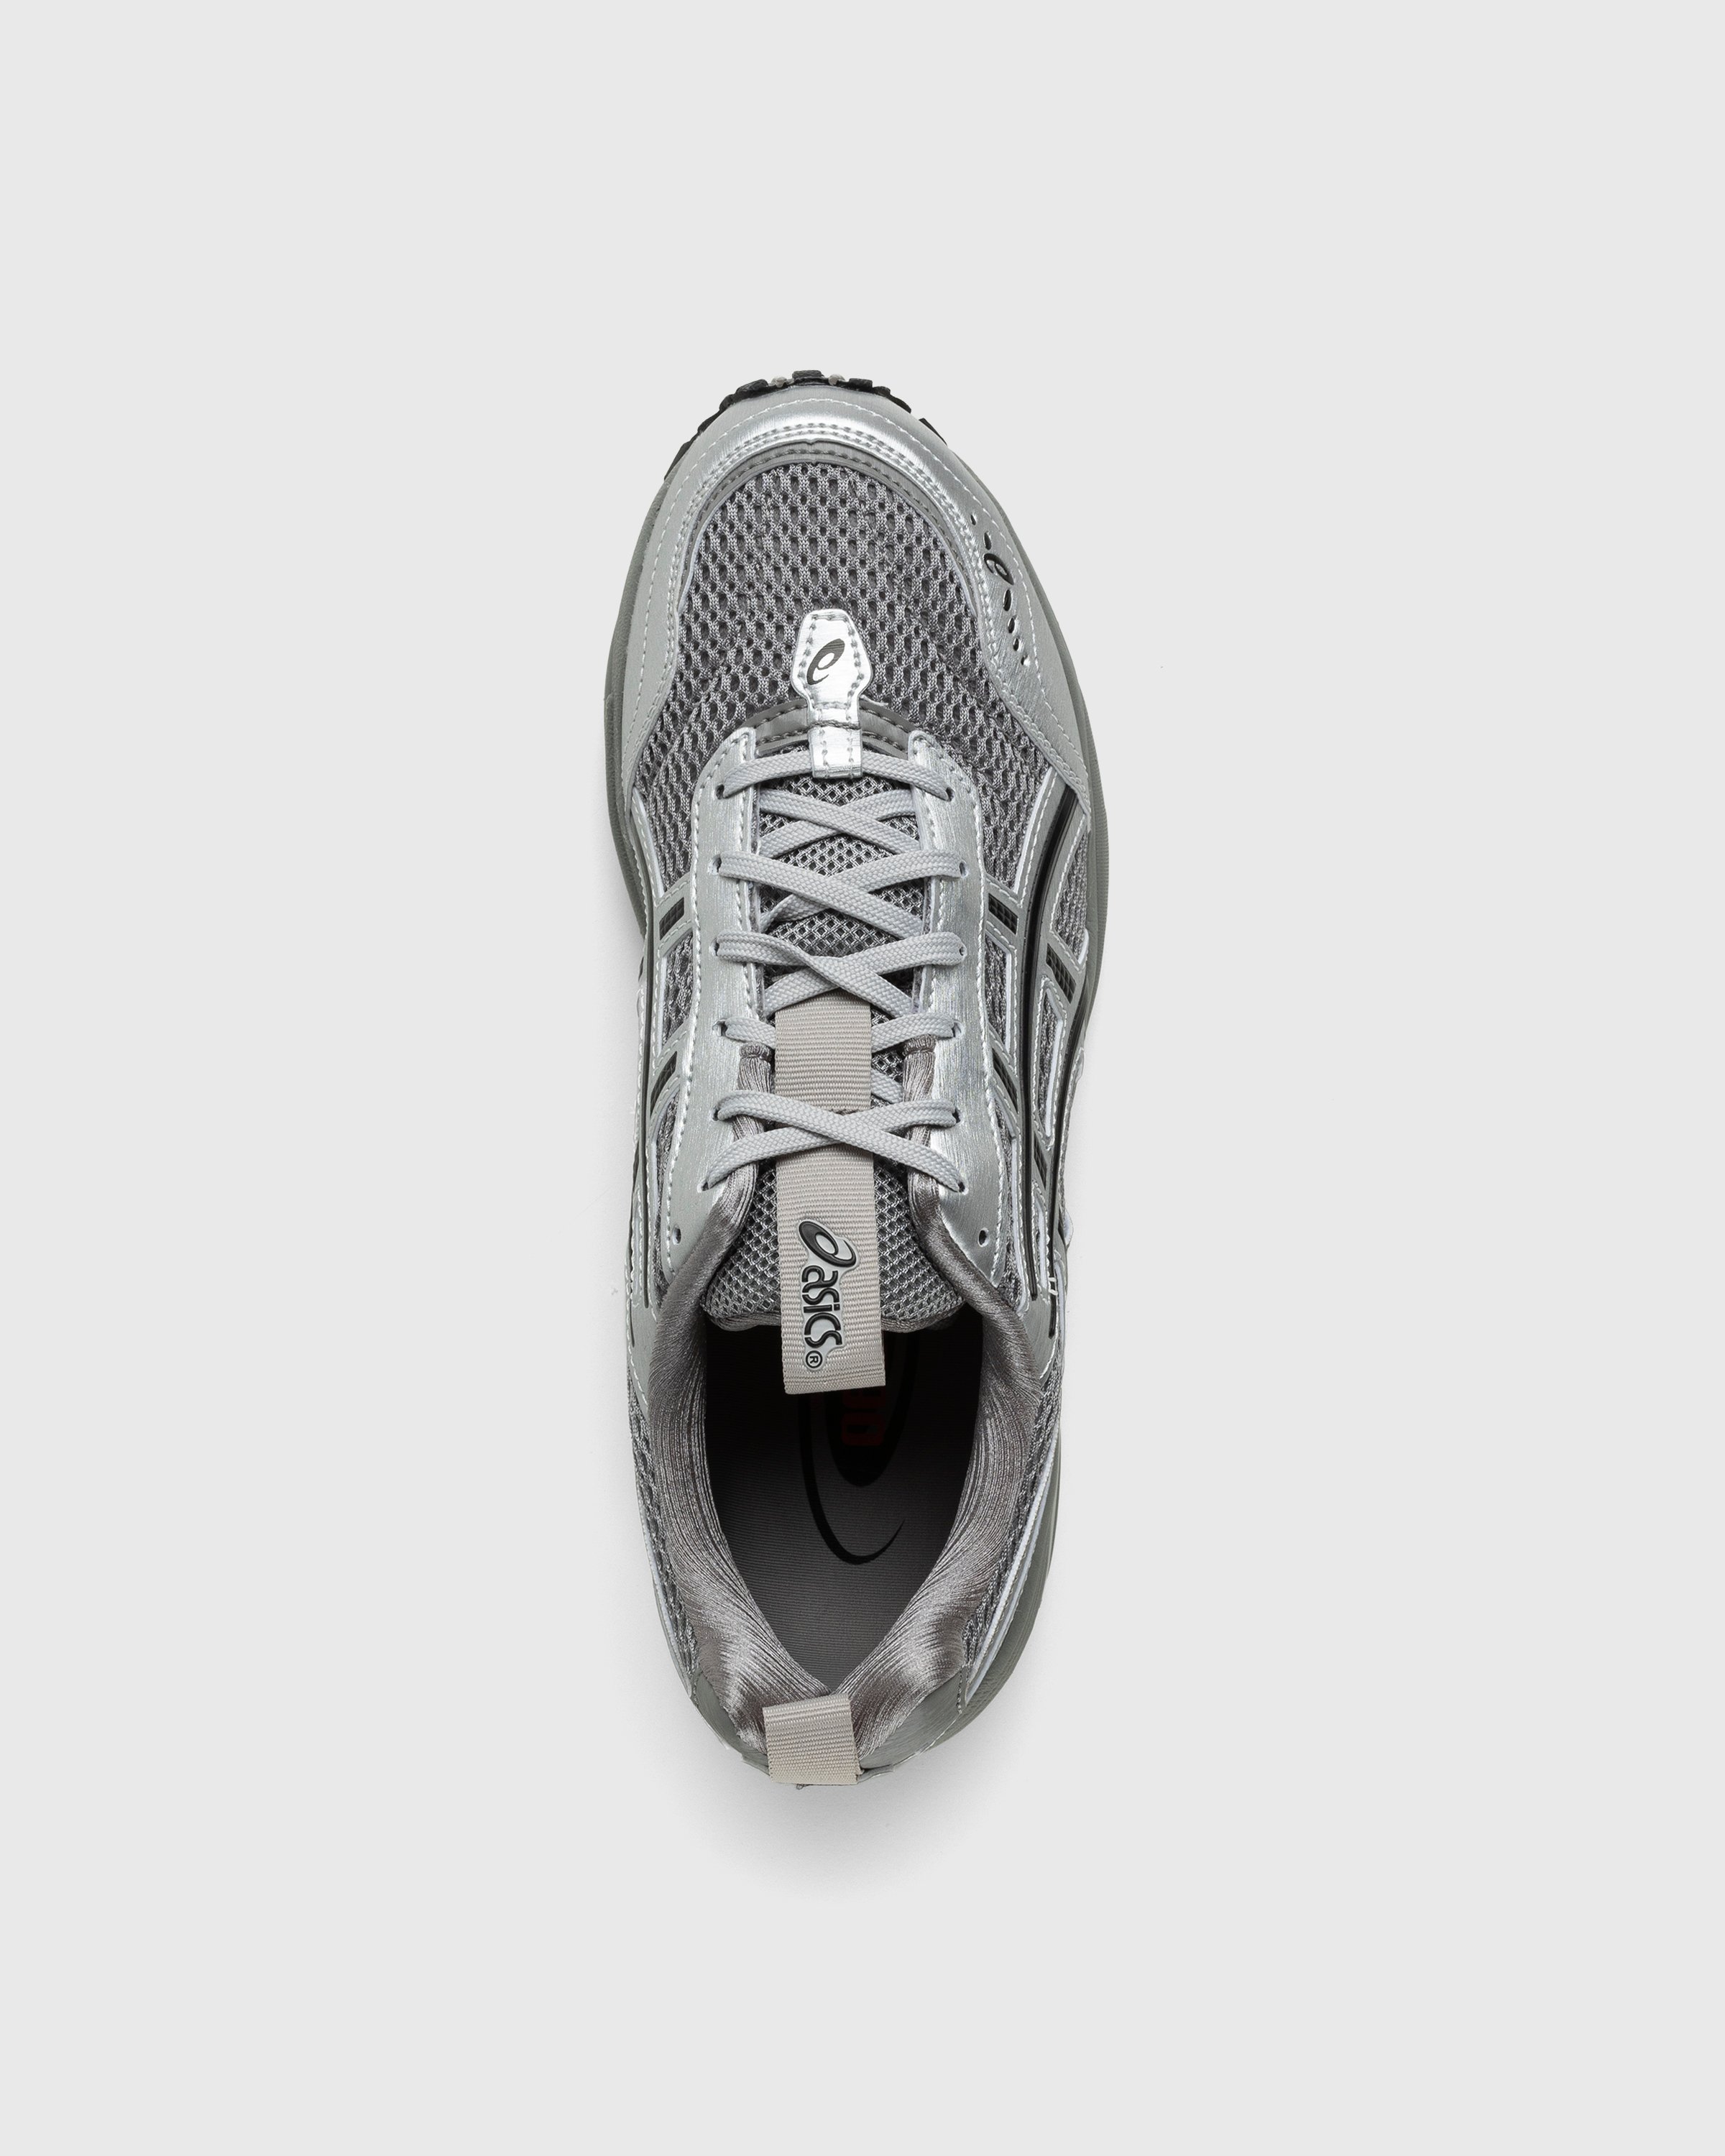 asics - GEL-1090v2 Freja Wewer Edition Silver - Footwear - Silver - Image 5